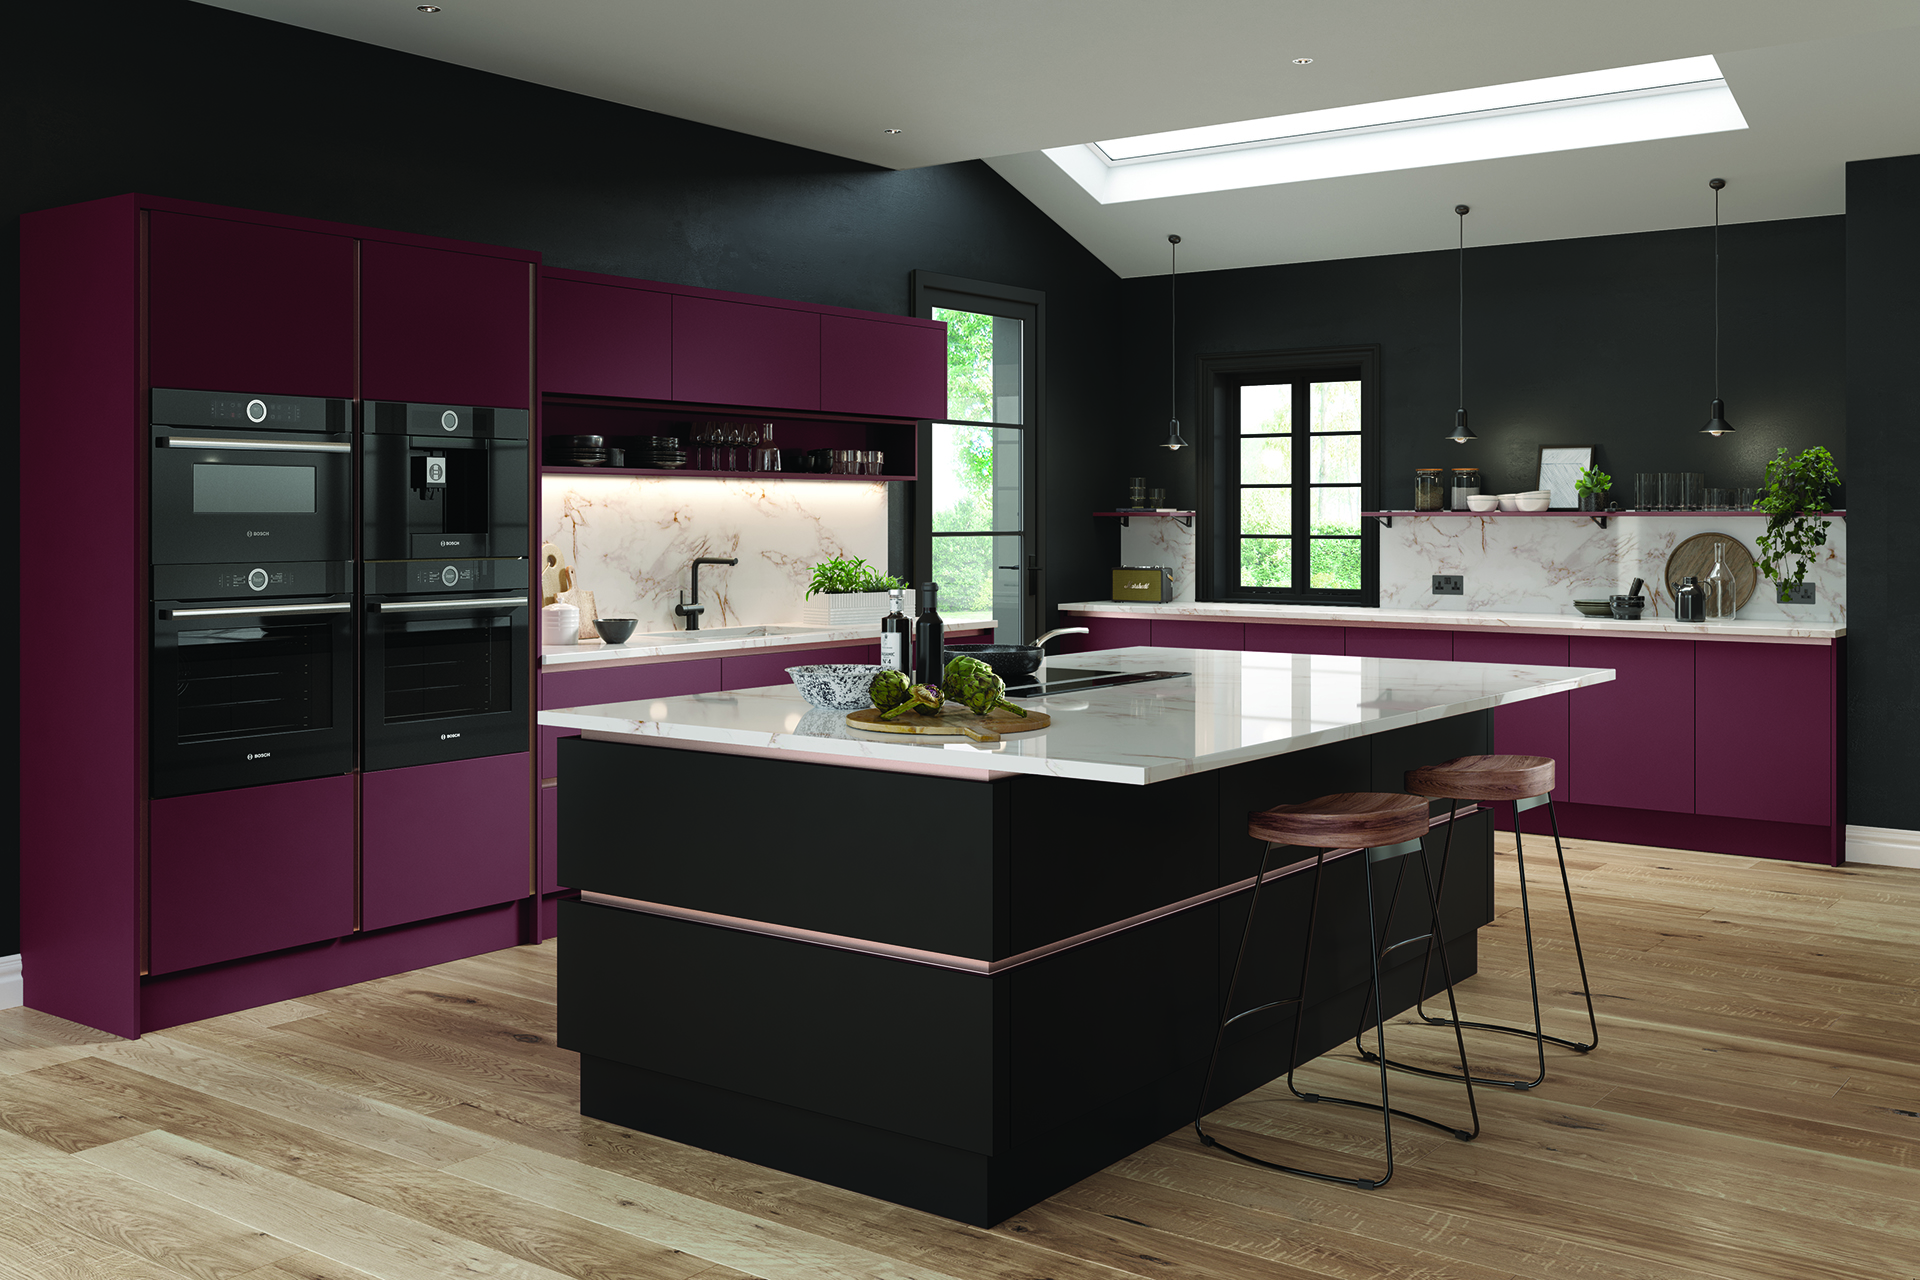 7. Baby it’s cold outside, so choose the warming colour of the InRail Zurfiz Serica Matt Plum & Serica Matt Black kitchen